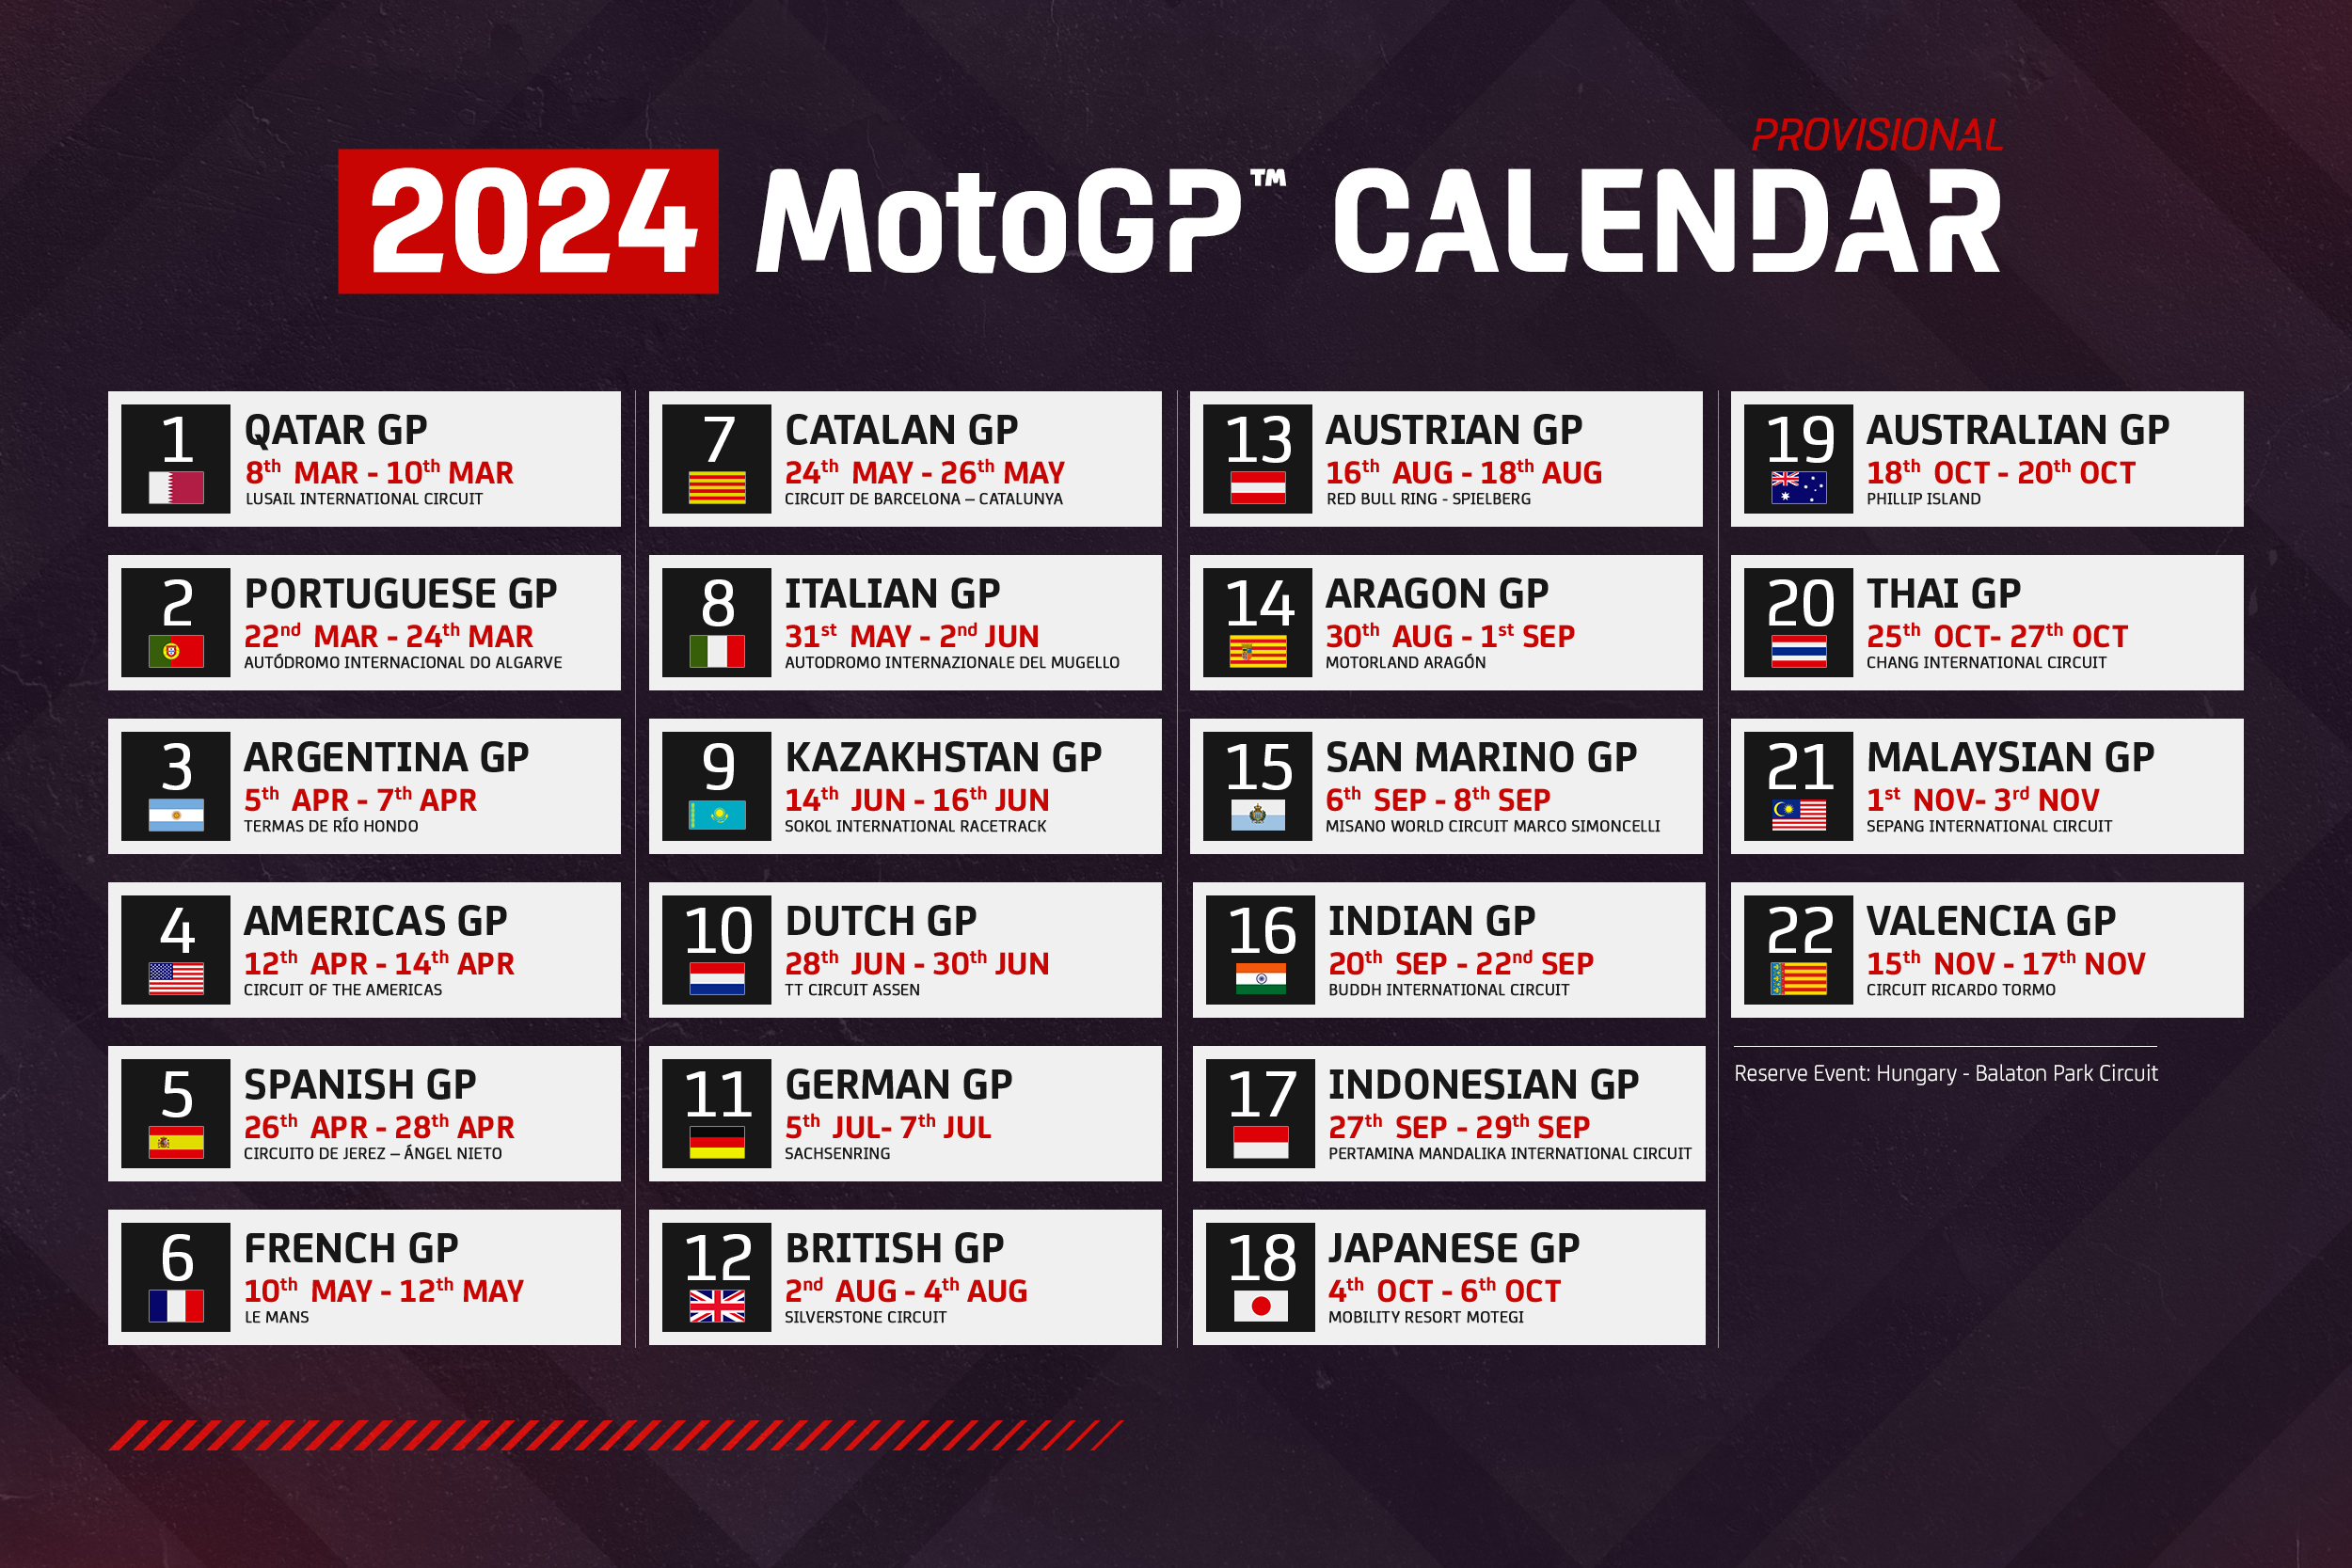 2024-motogp-calendar-revealed-phillip-island-october-20-mcnews